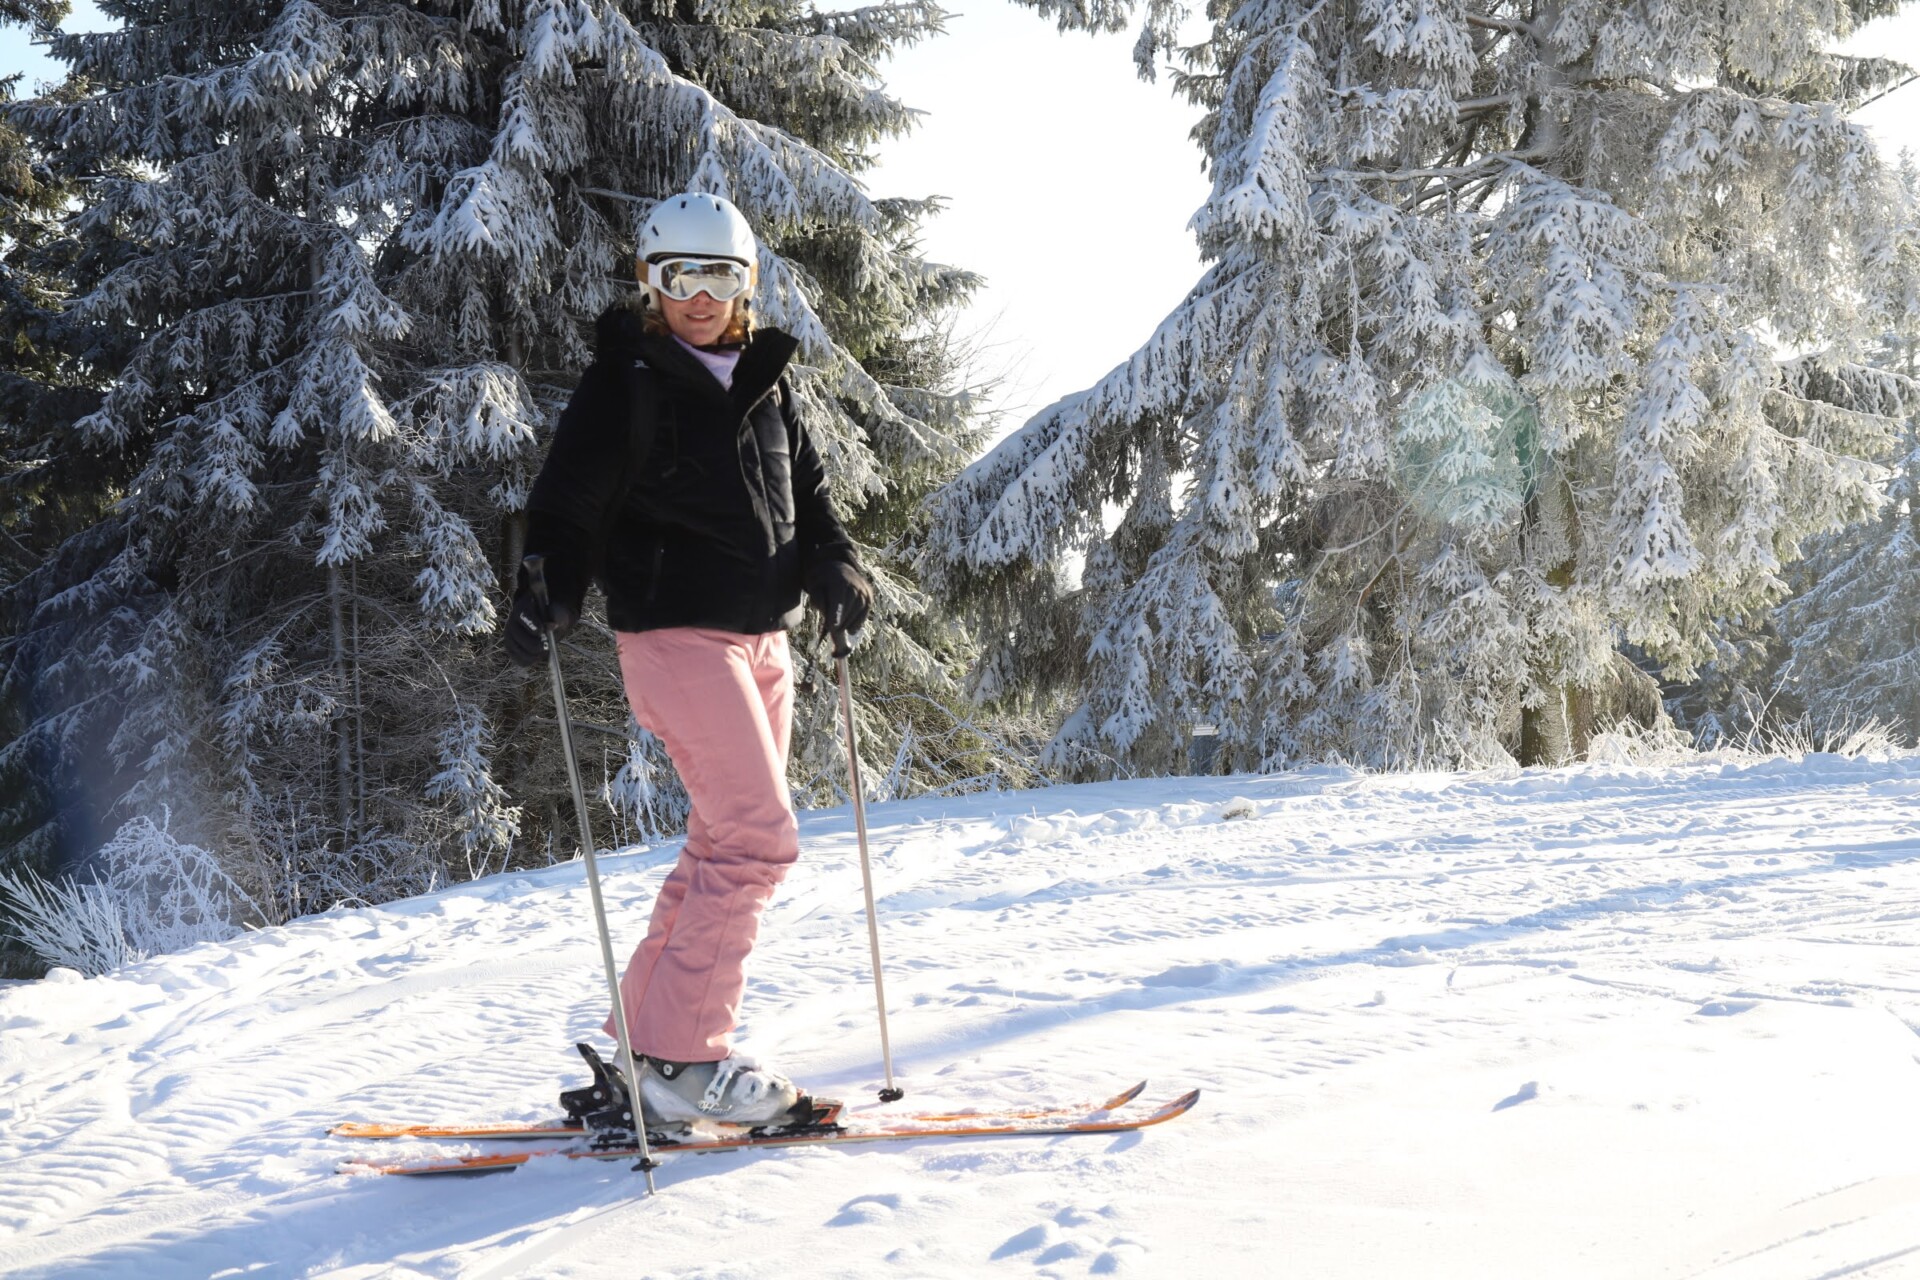 Protest Velvet ski-jas. divastijl de piste - Alpenweerman